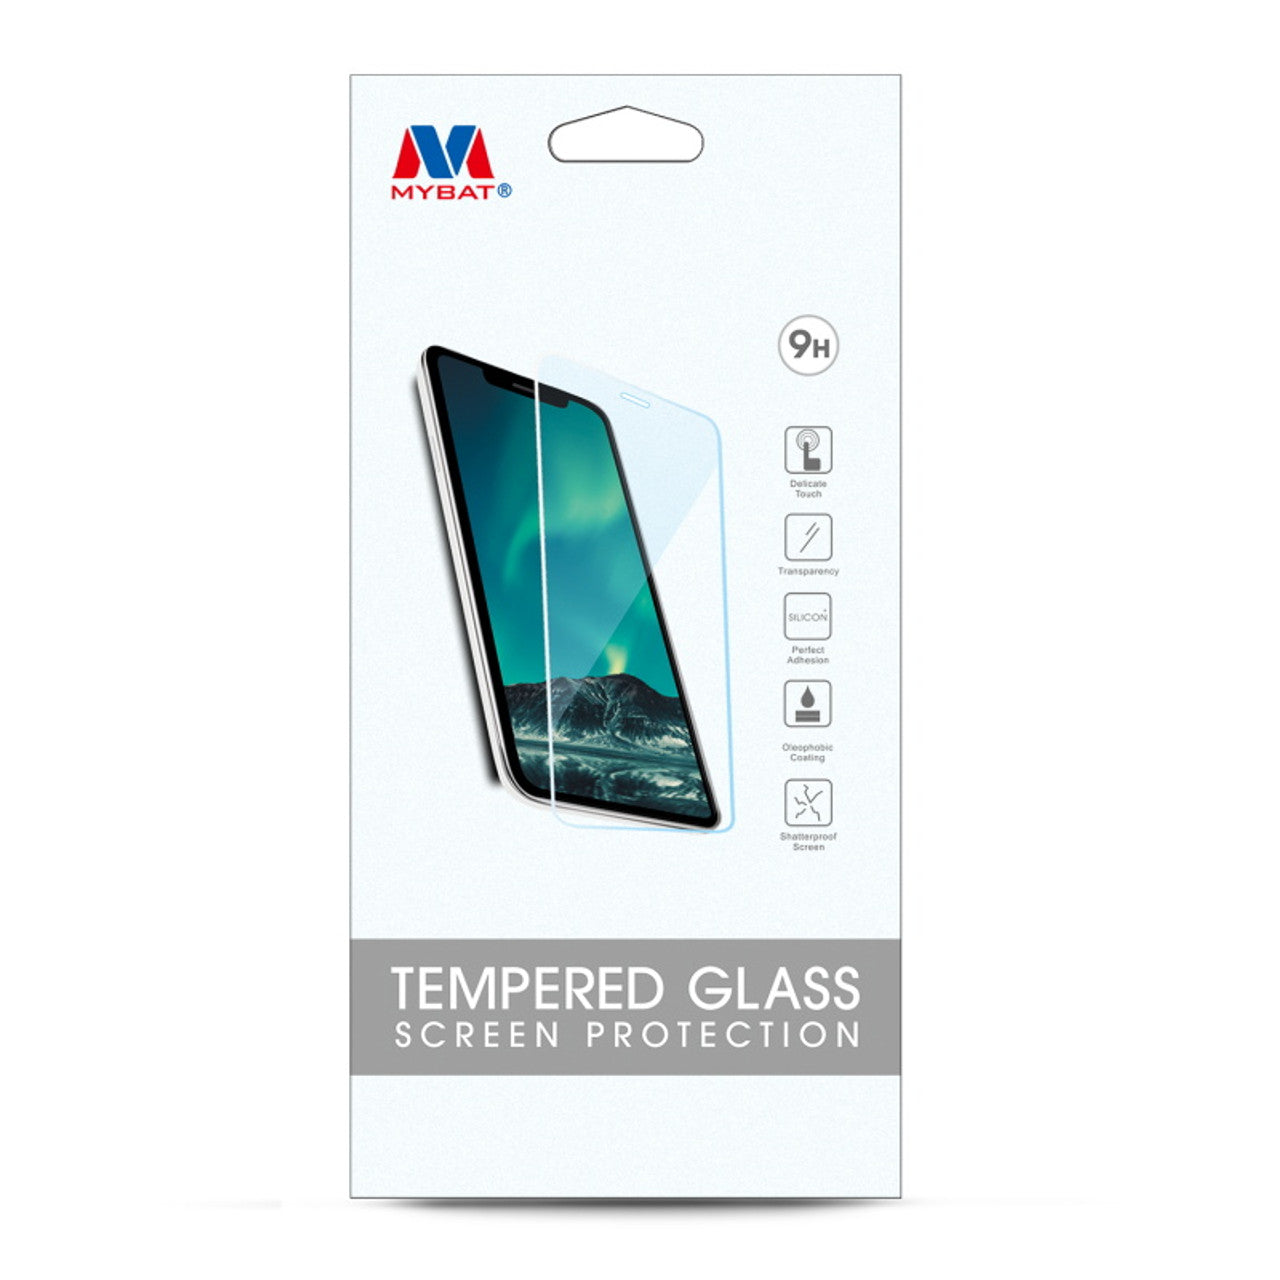 MyBat iPhone XS/X/11 Pro 2 Valor Vidrio Templado - MyBat iPhone XS/X/11 Pro 2 Value Tempered Glass